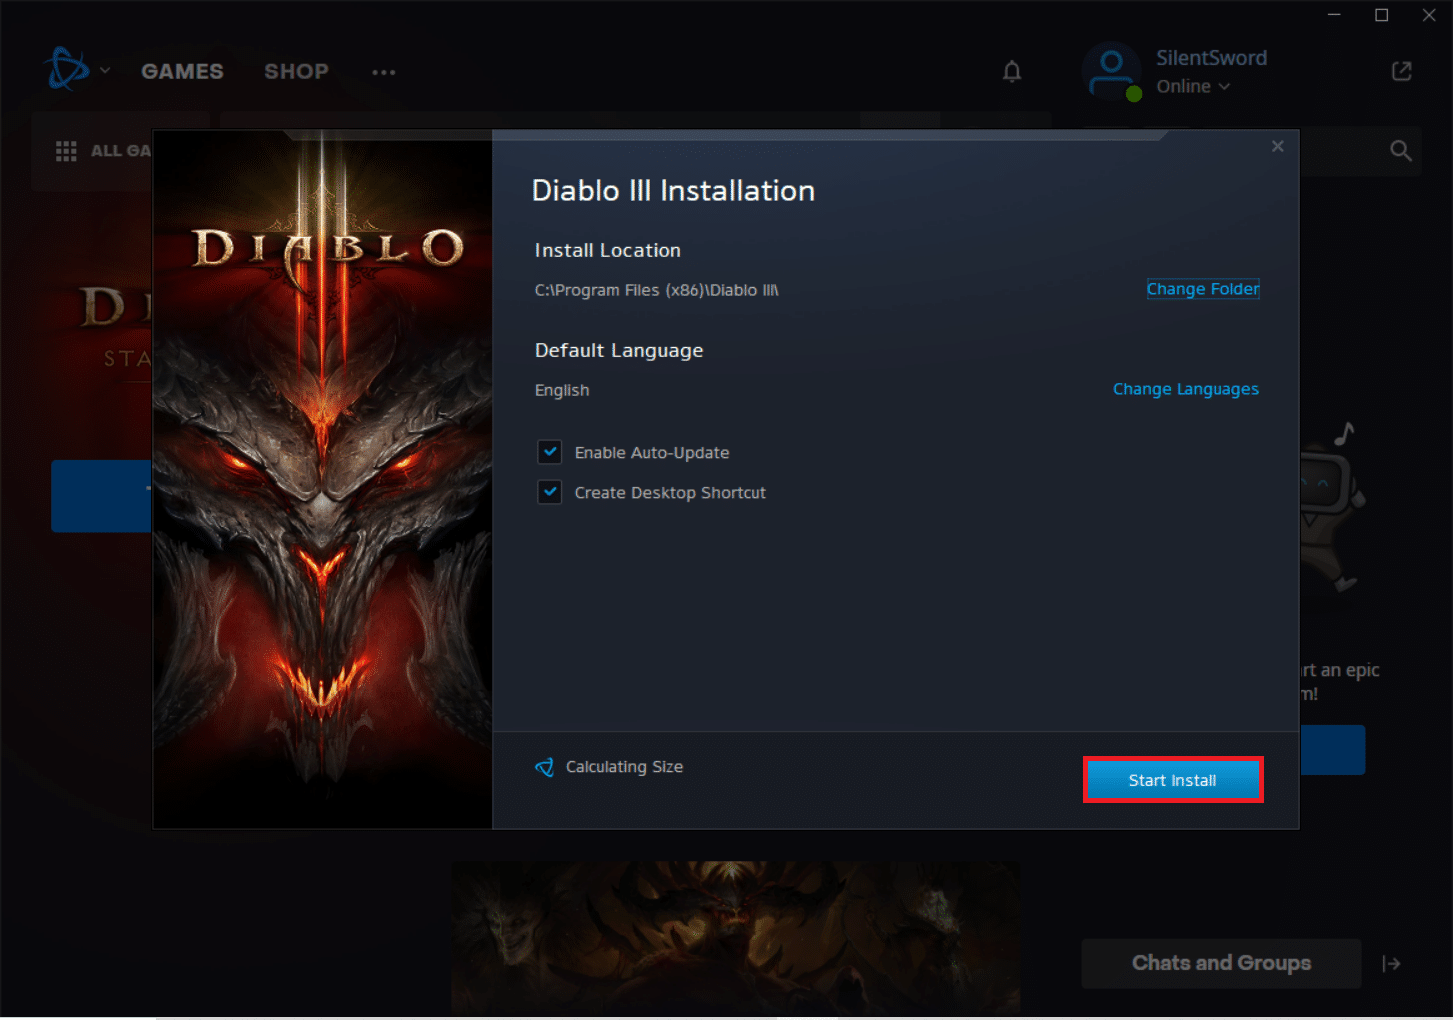 click on Start Install. Fix Diablo 3 Error Code 1016 on Windows 10